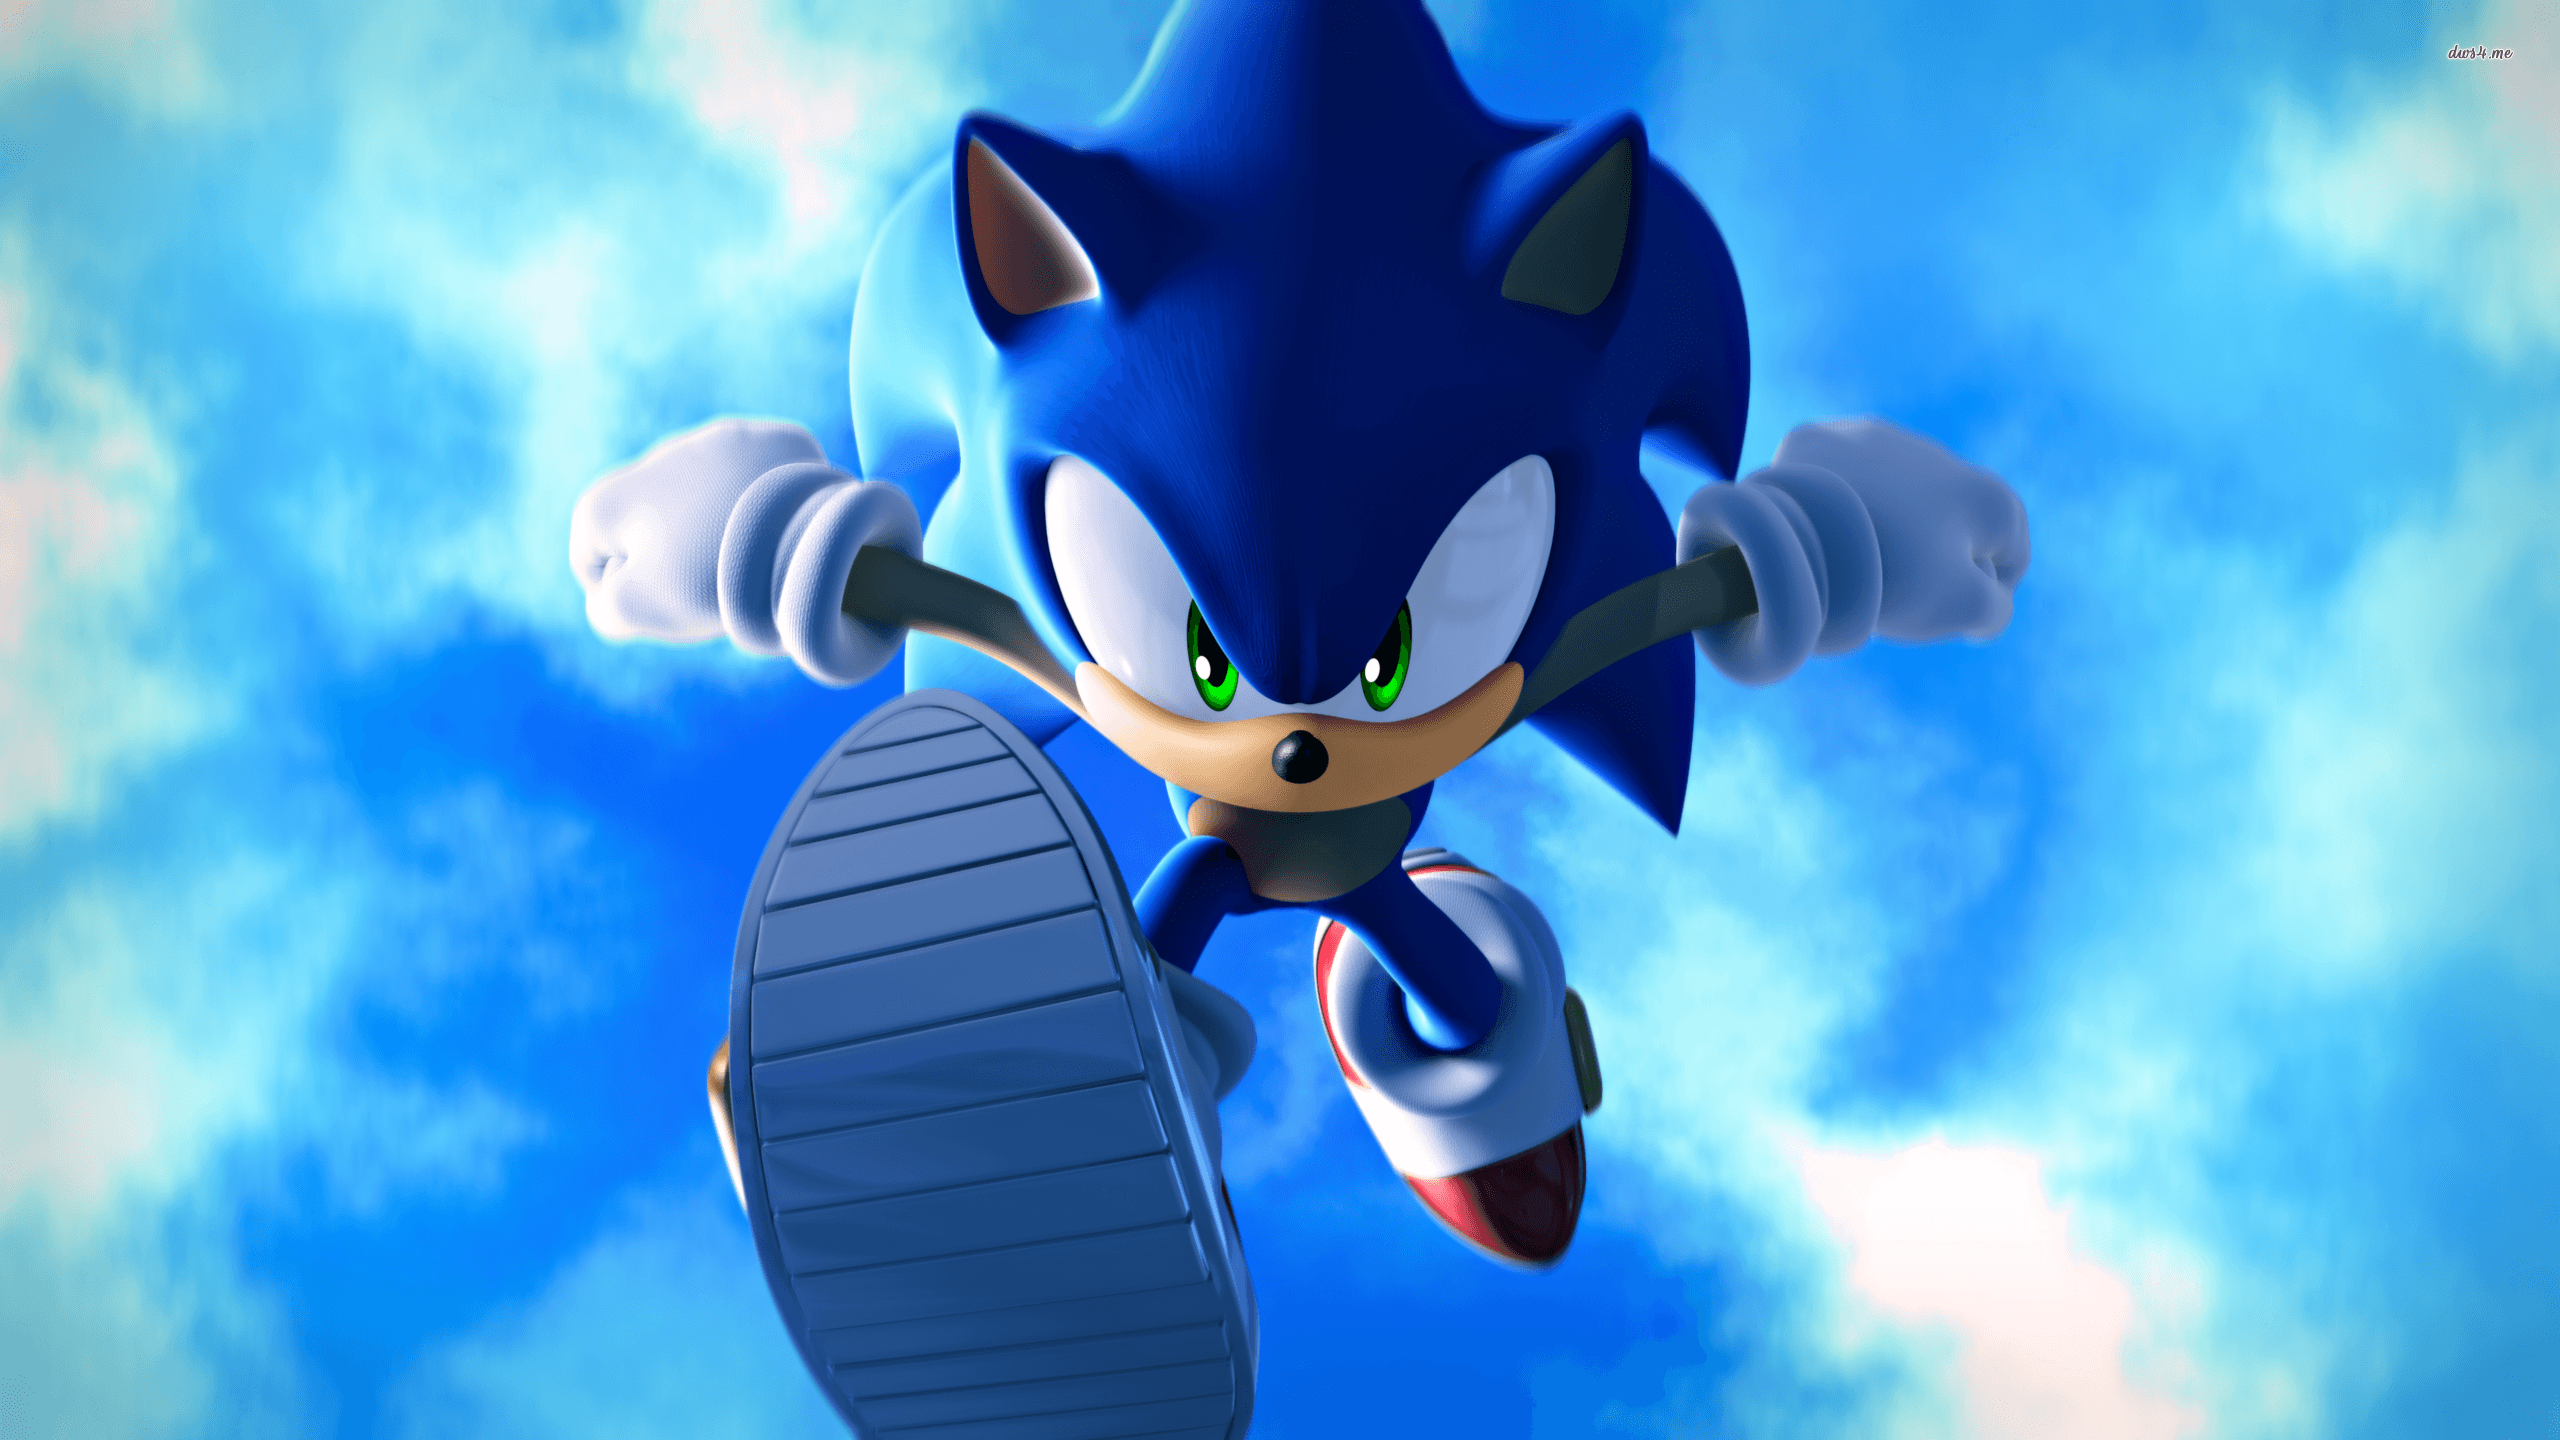 Sonic the Hedgehog 4K Wallpapers - Top Free Sonic the Hedgehog 4K